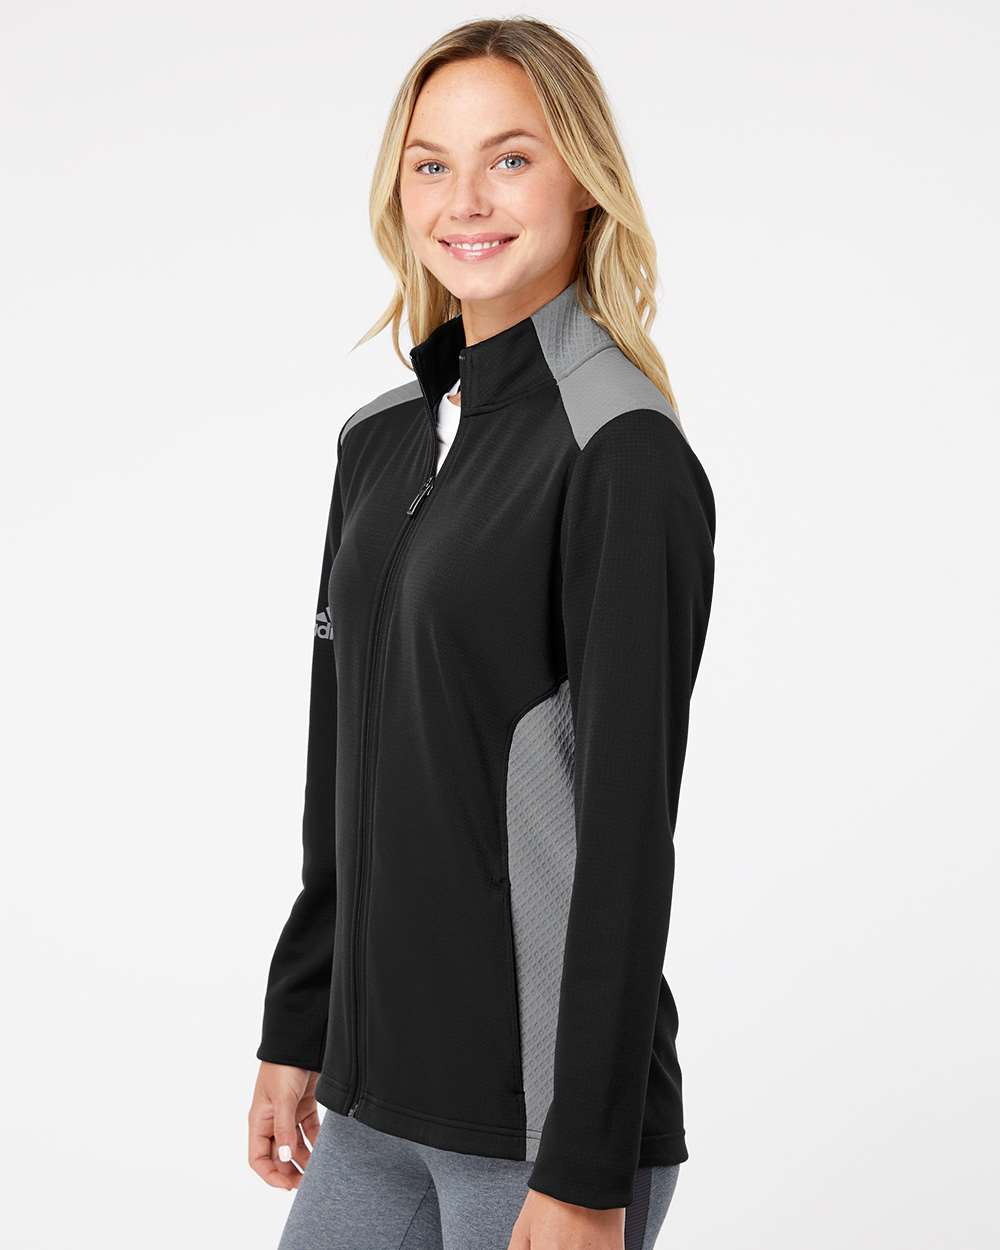 Adidas A529 Women's Textured Mixed Media Full-Zip Jacket #colormdl_Black/ Grey Three